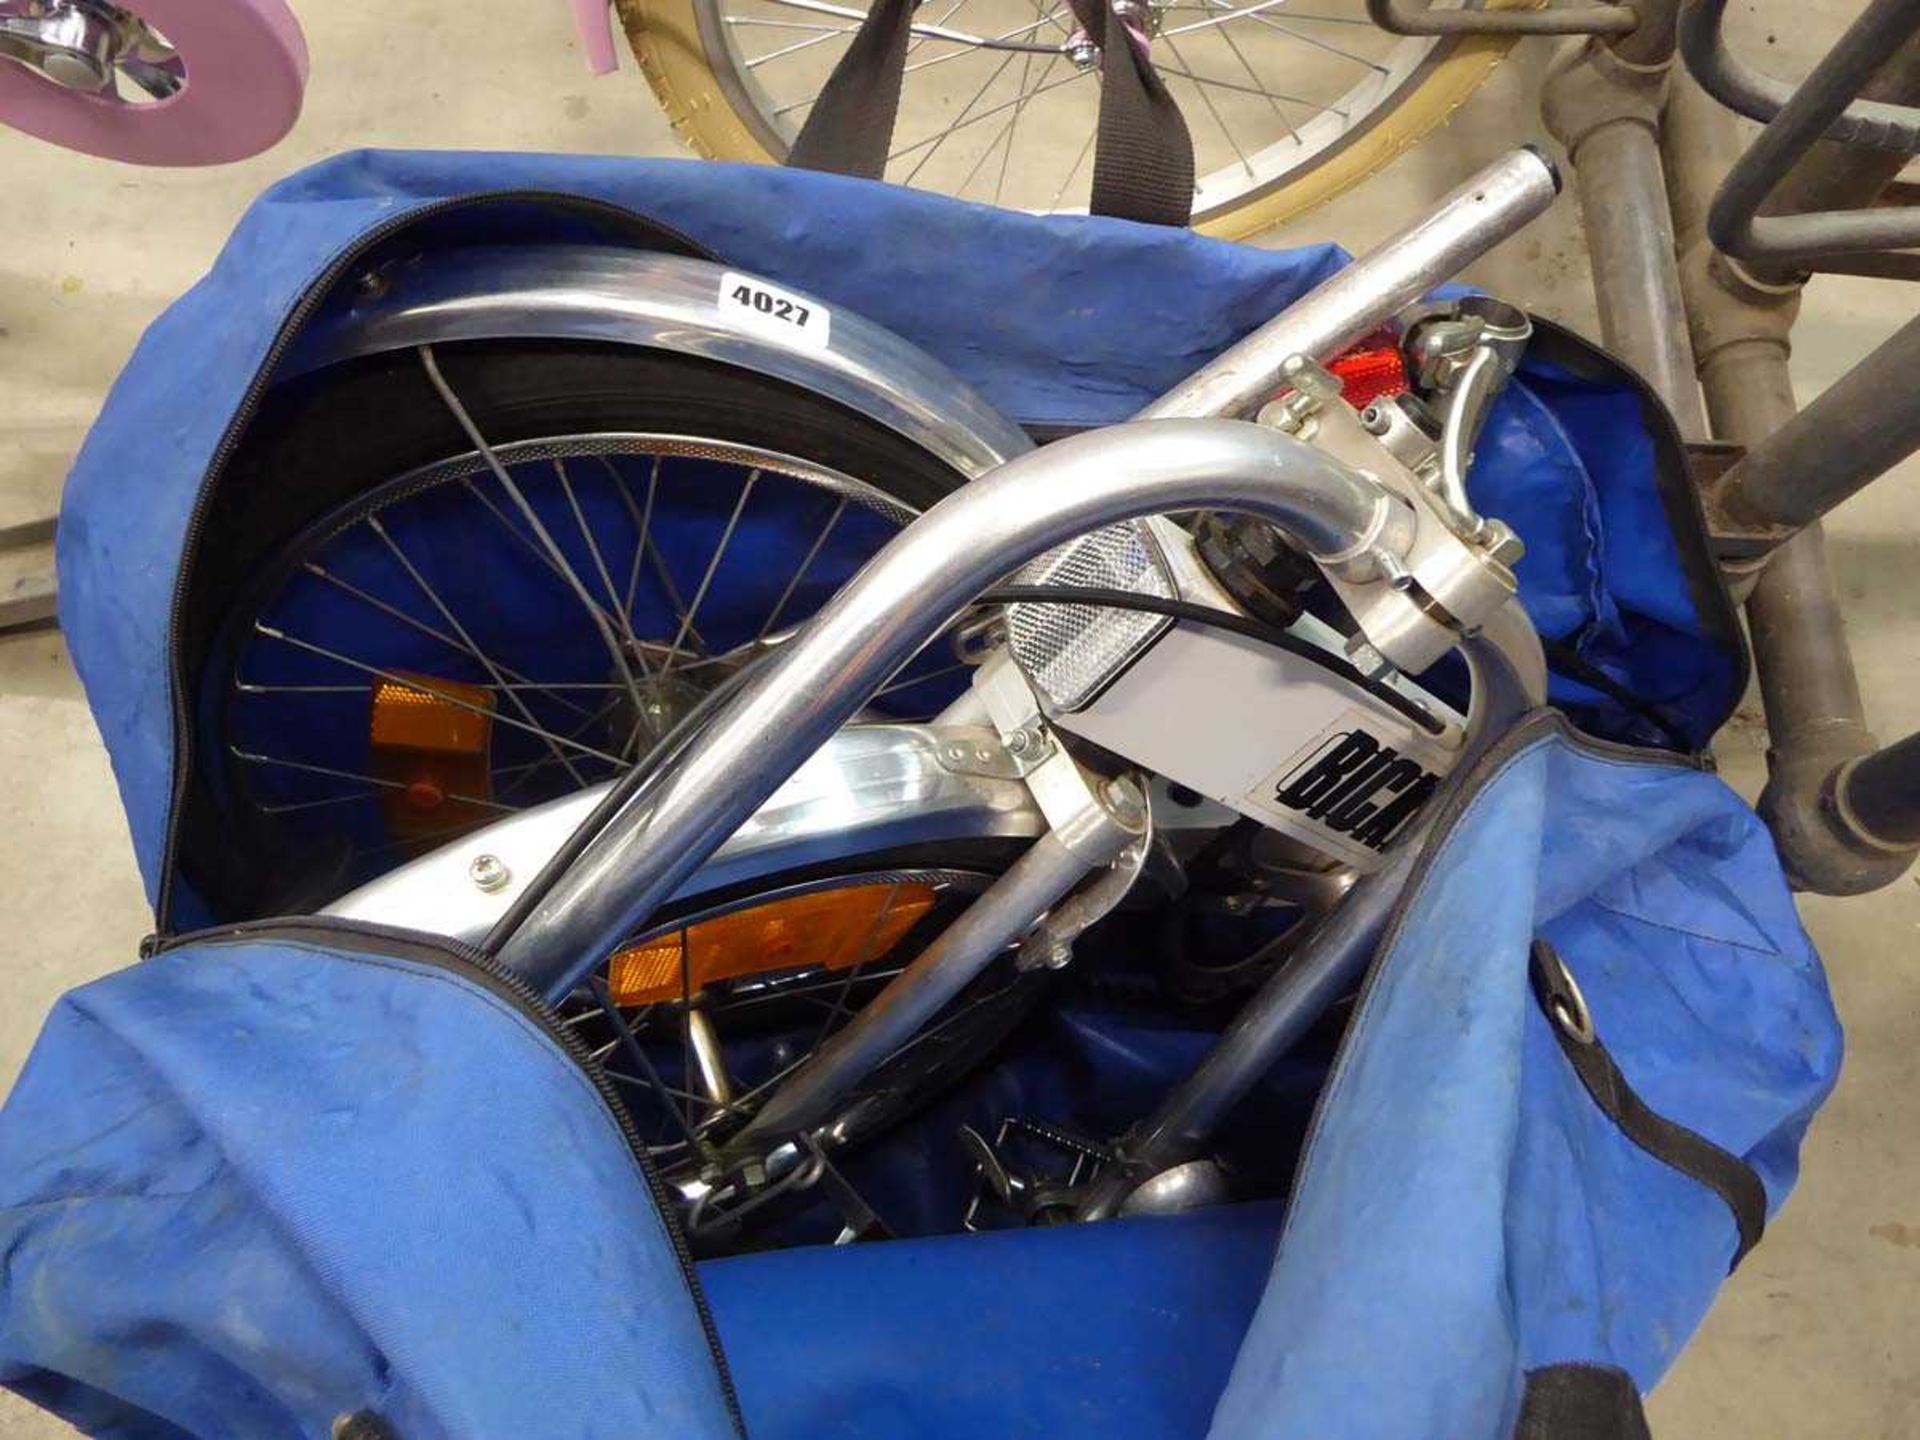 Fold up bike in bag